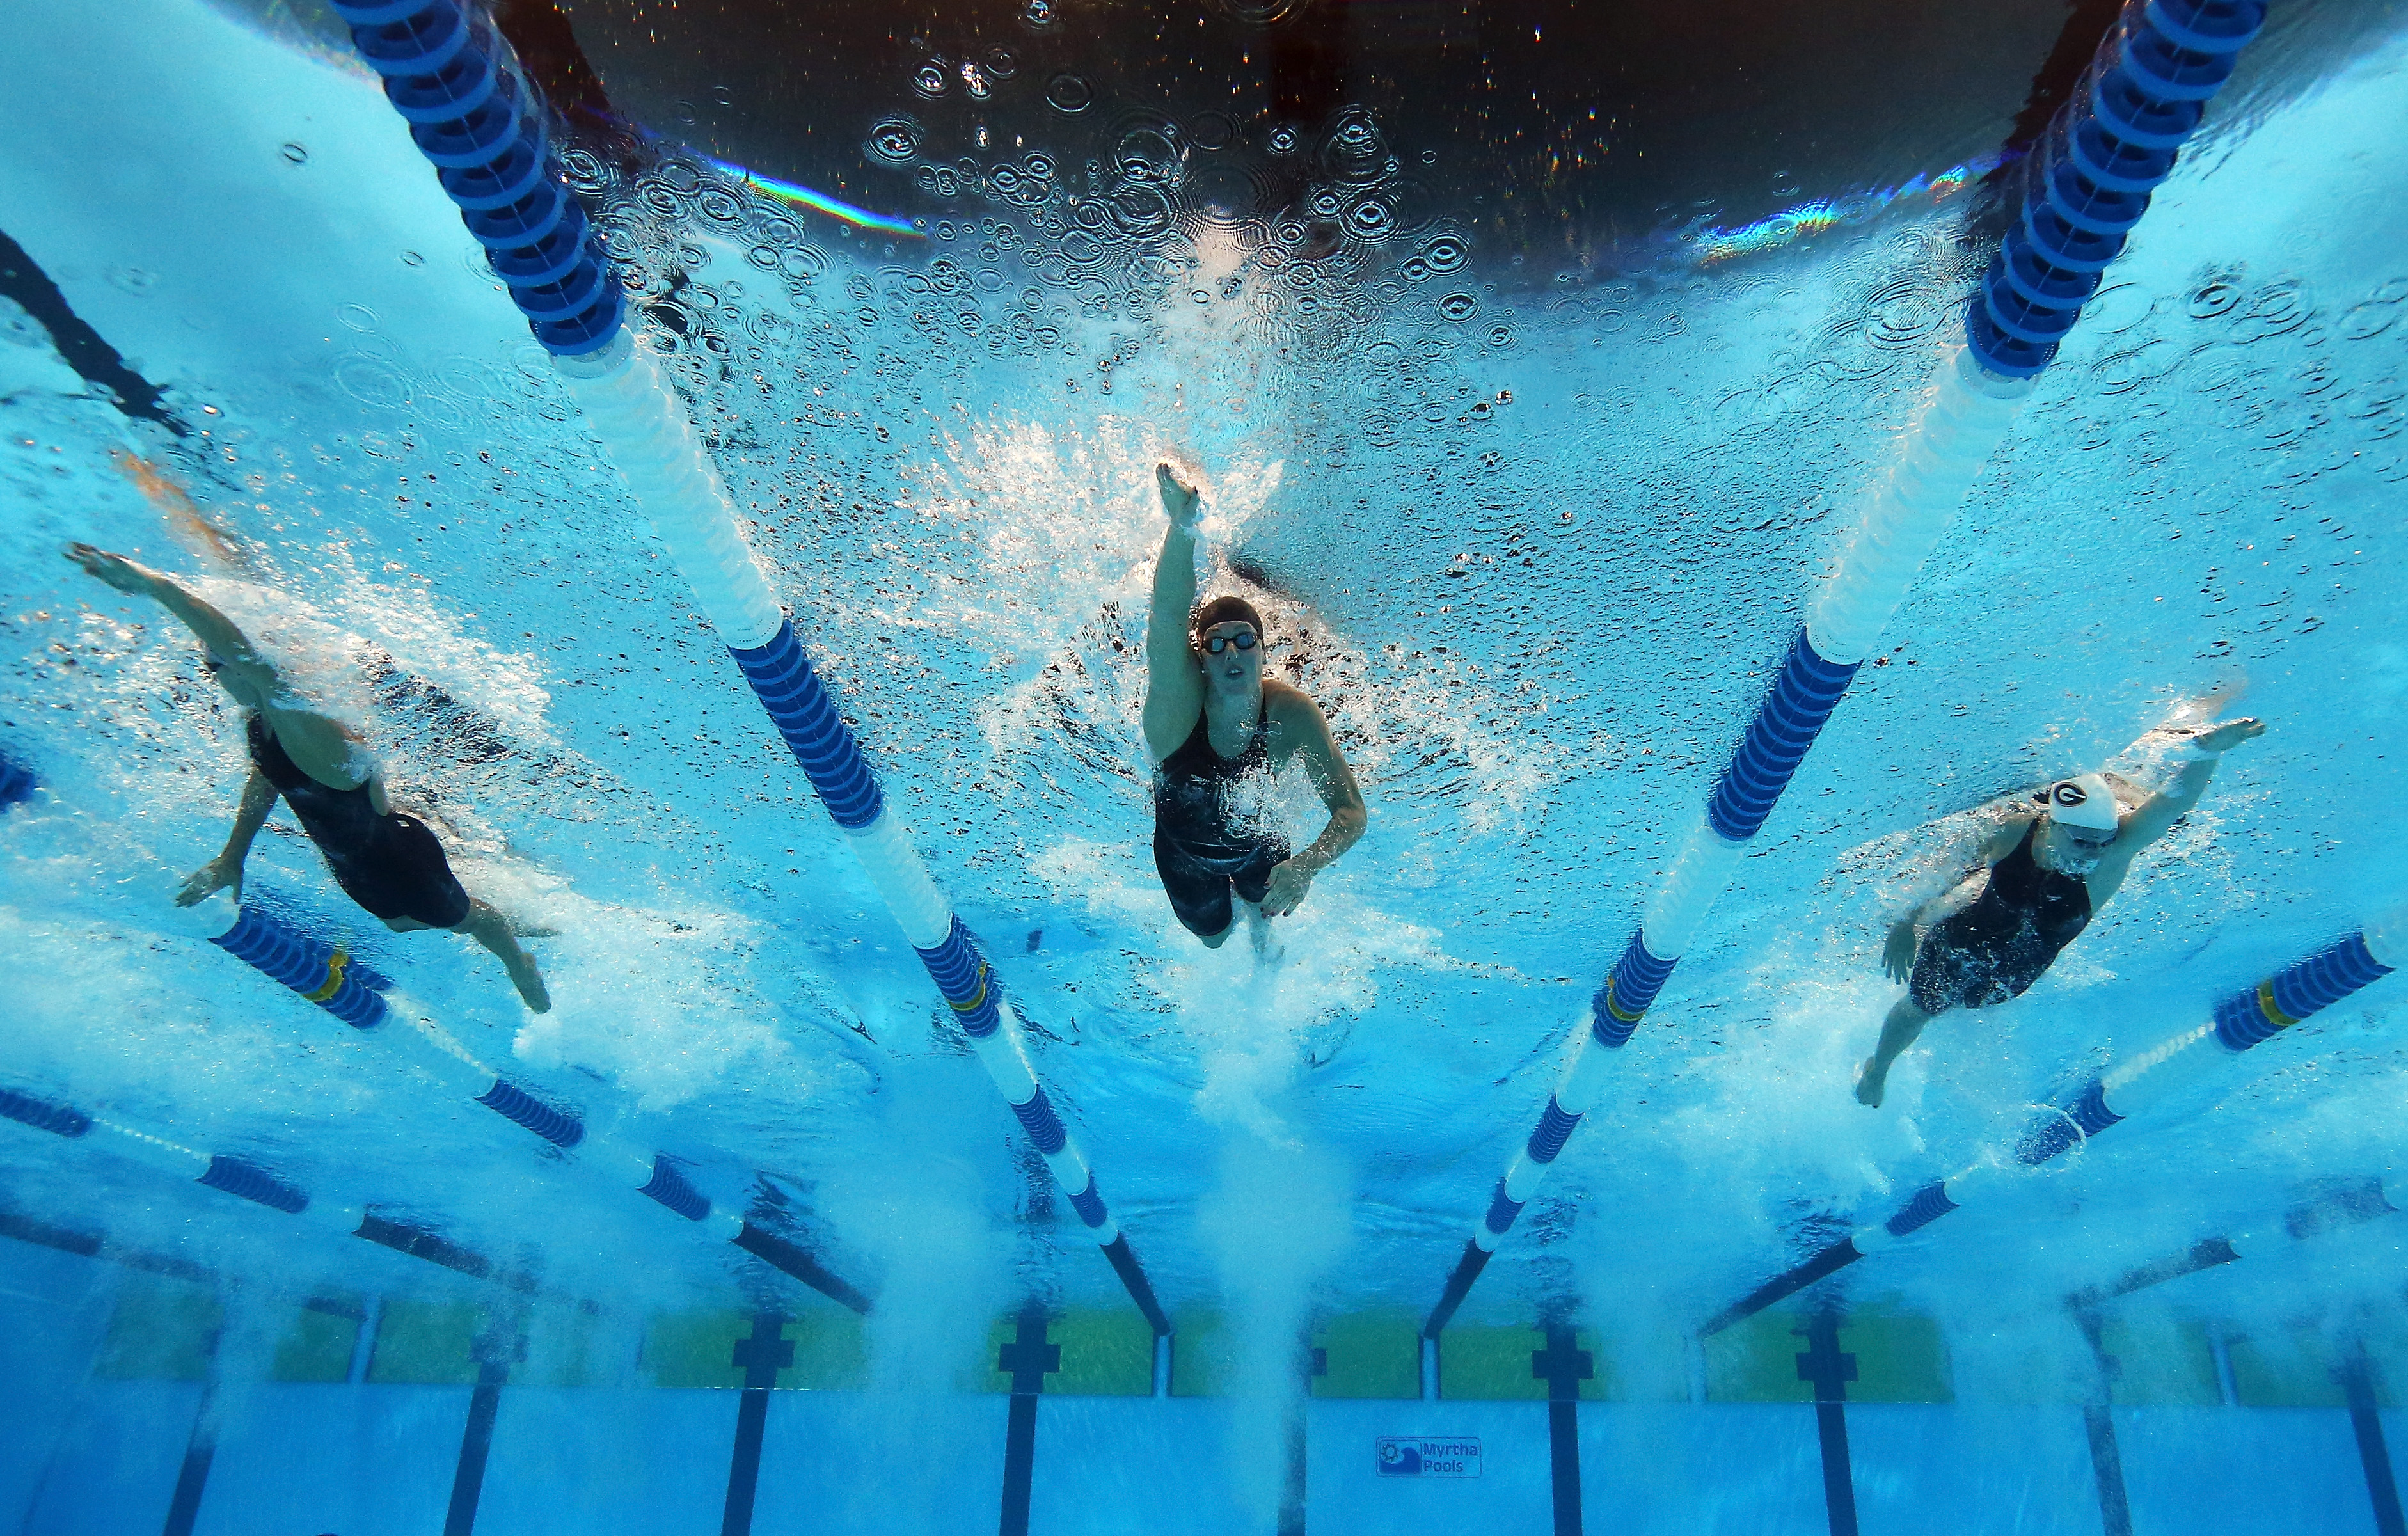 Sajan, Shivani to represent India in swimming at Rio Olympics